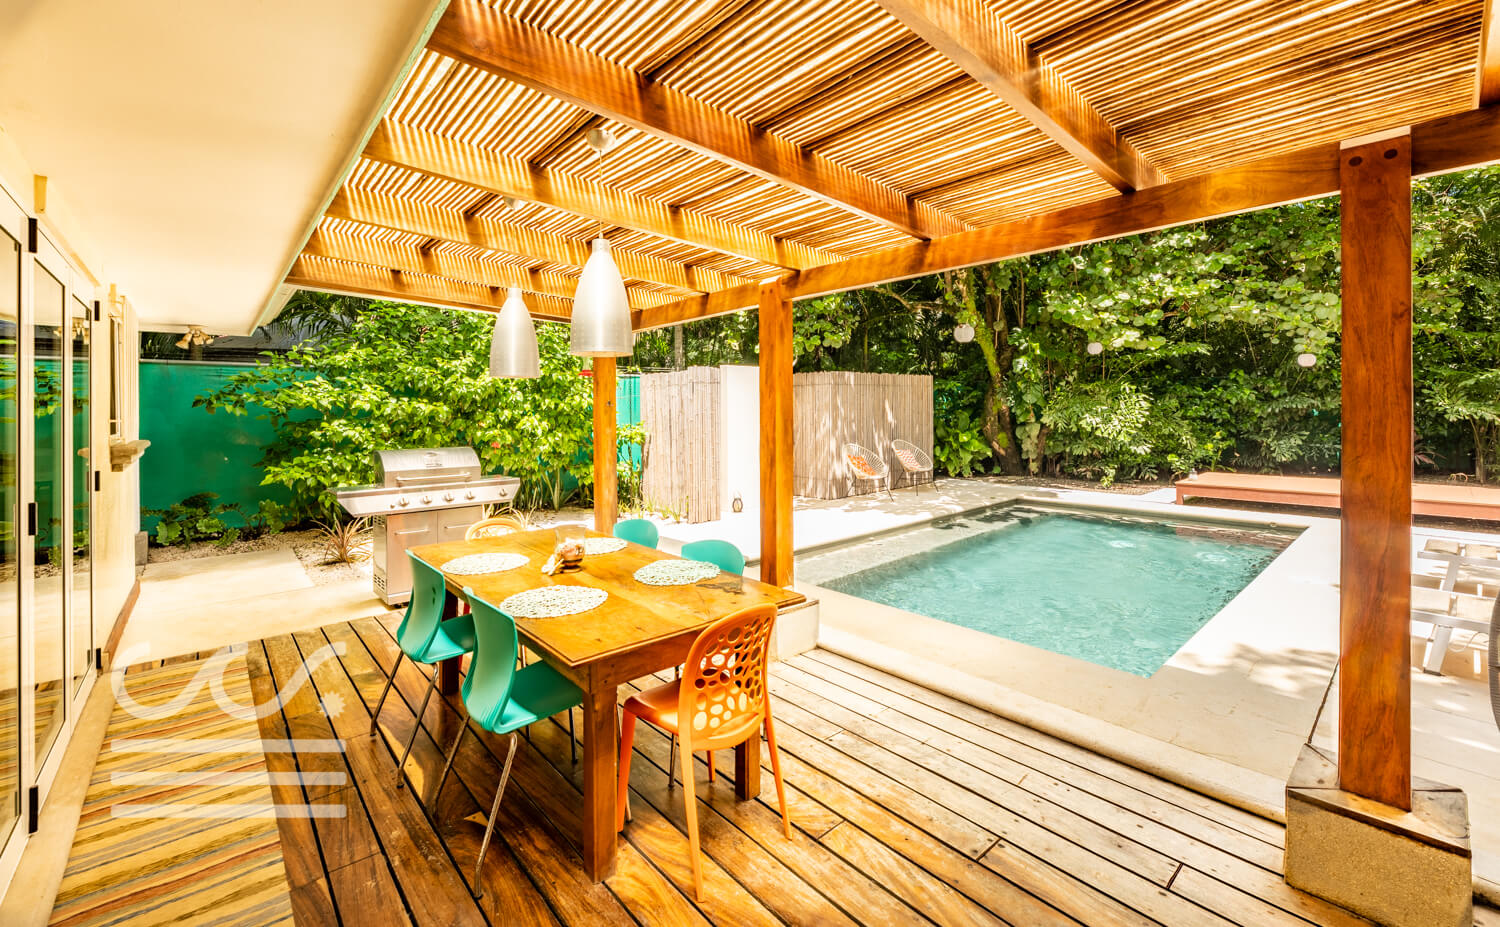 Casa-Coco-Wanderlust-Realty-Real-Estate-Rentals-Nosara-Costa-Rica-6.jpg